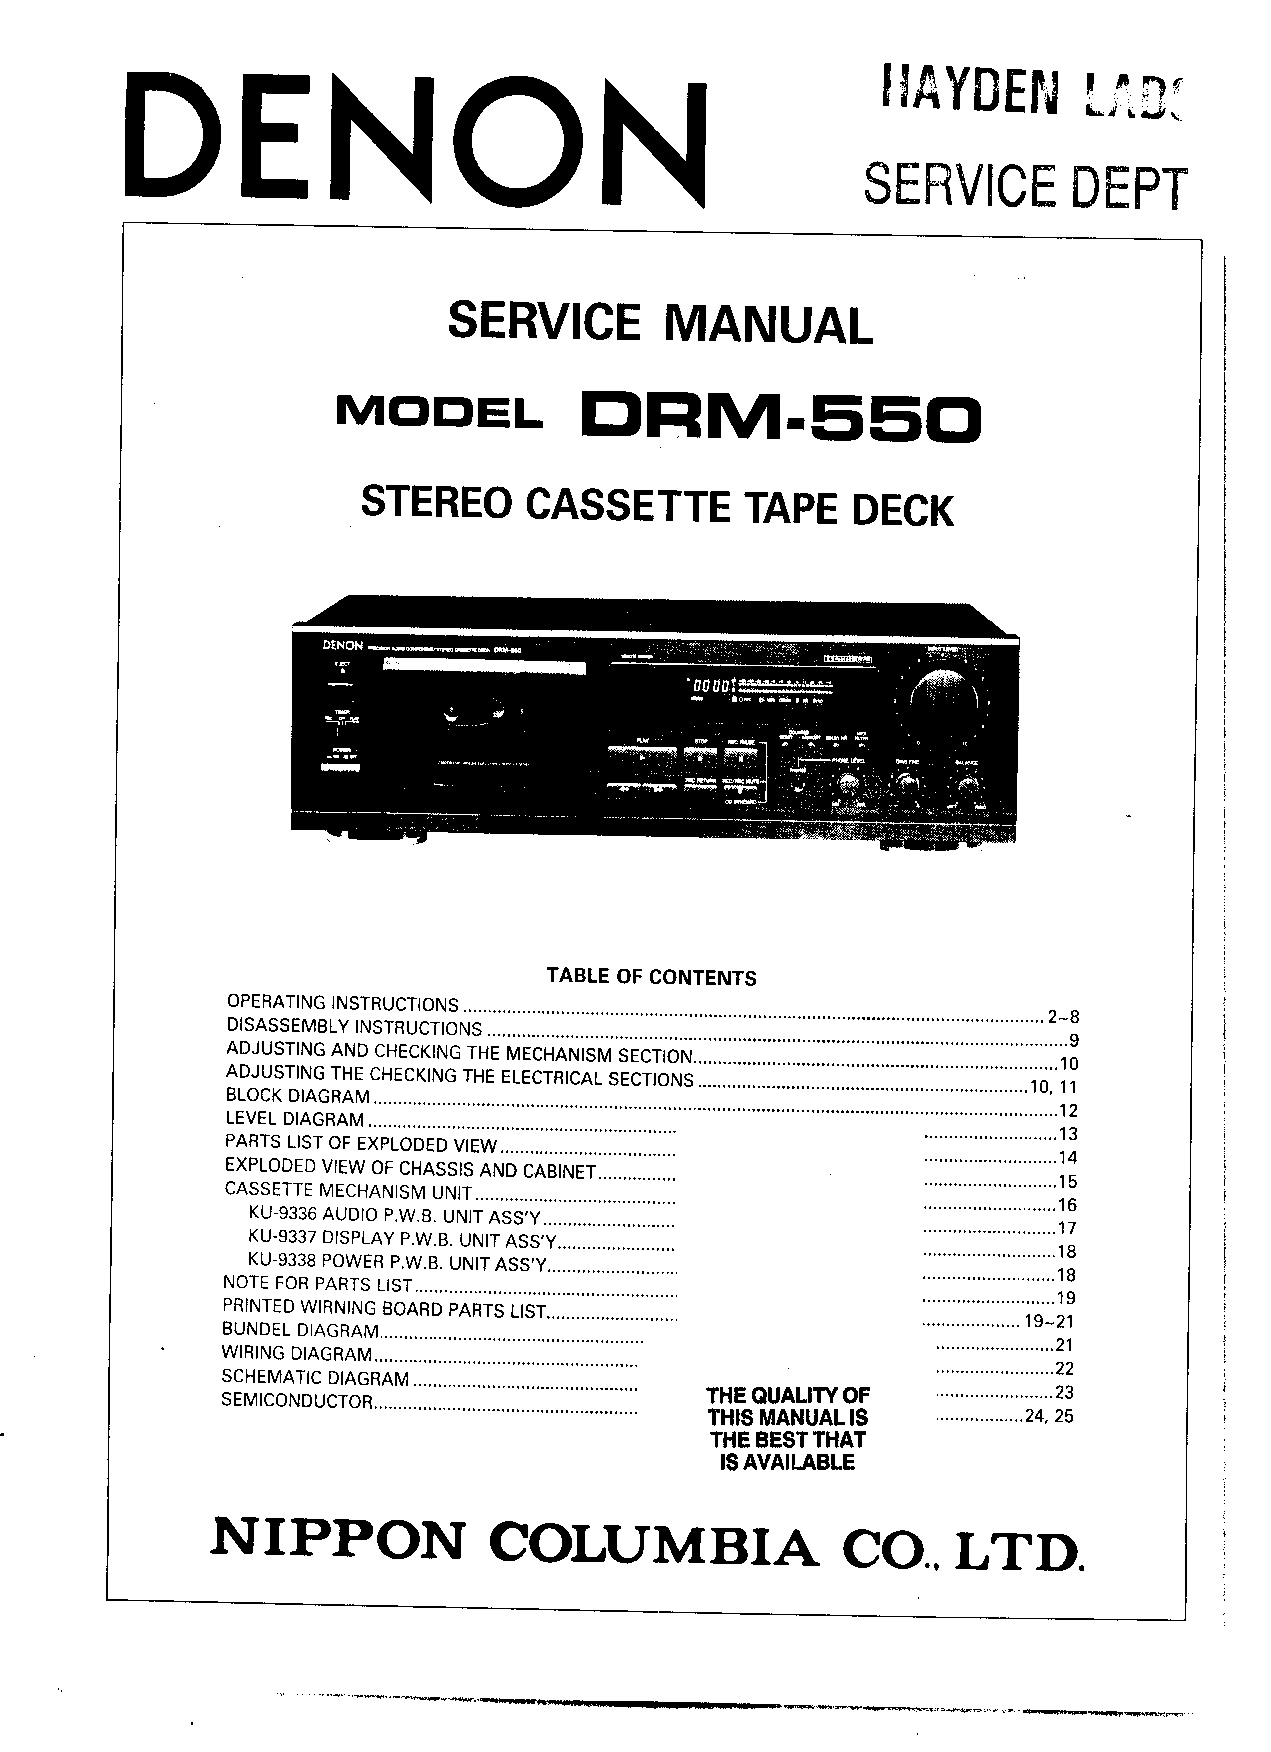 Denon DRM-550 Service Manual